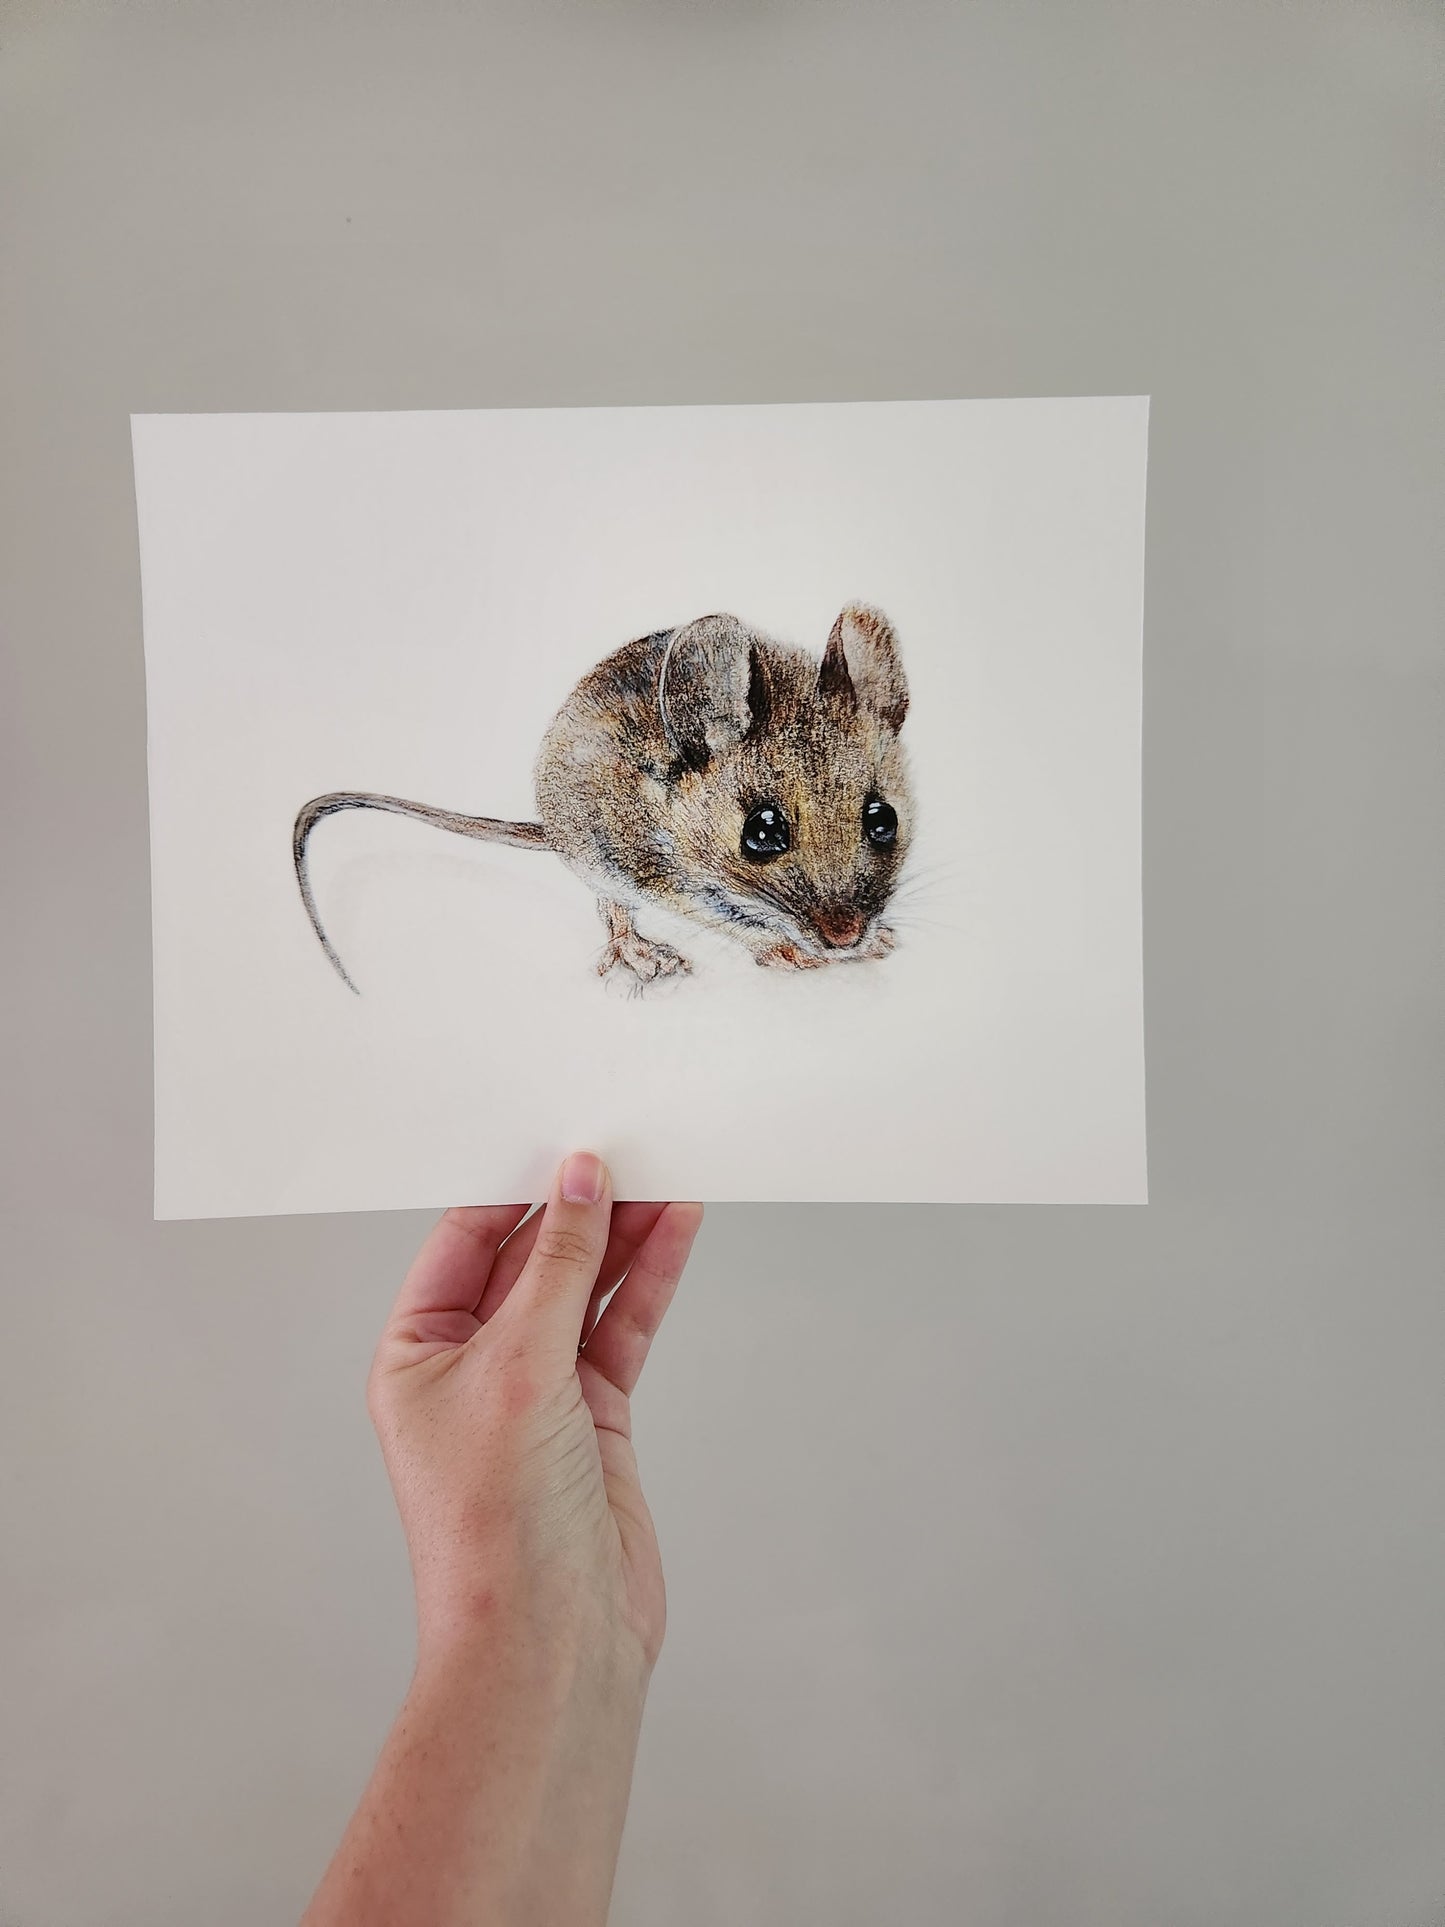 Woodland Mouse art print, Wildlife art print, Giclee print on fine art paper